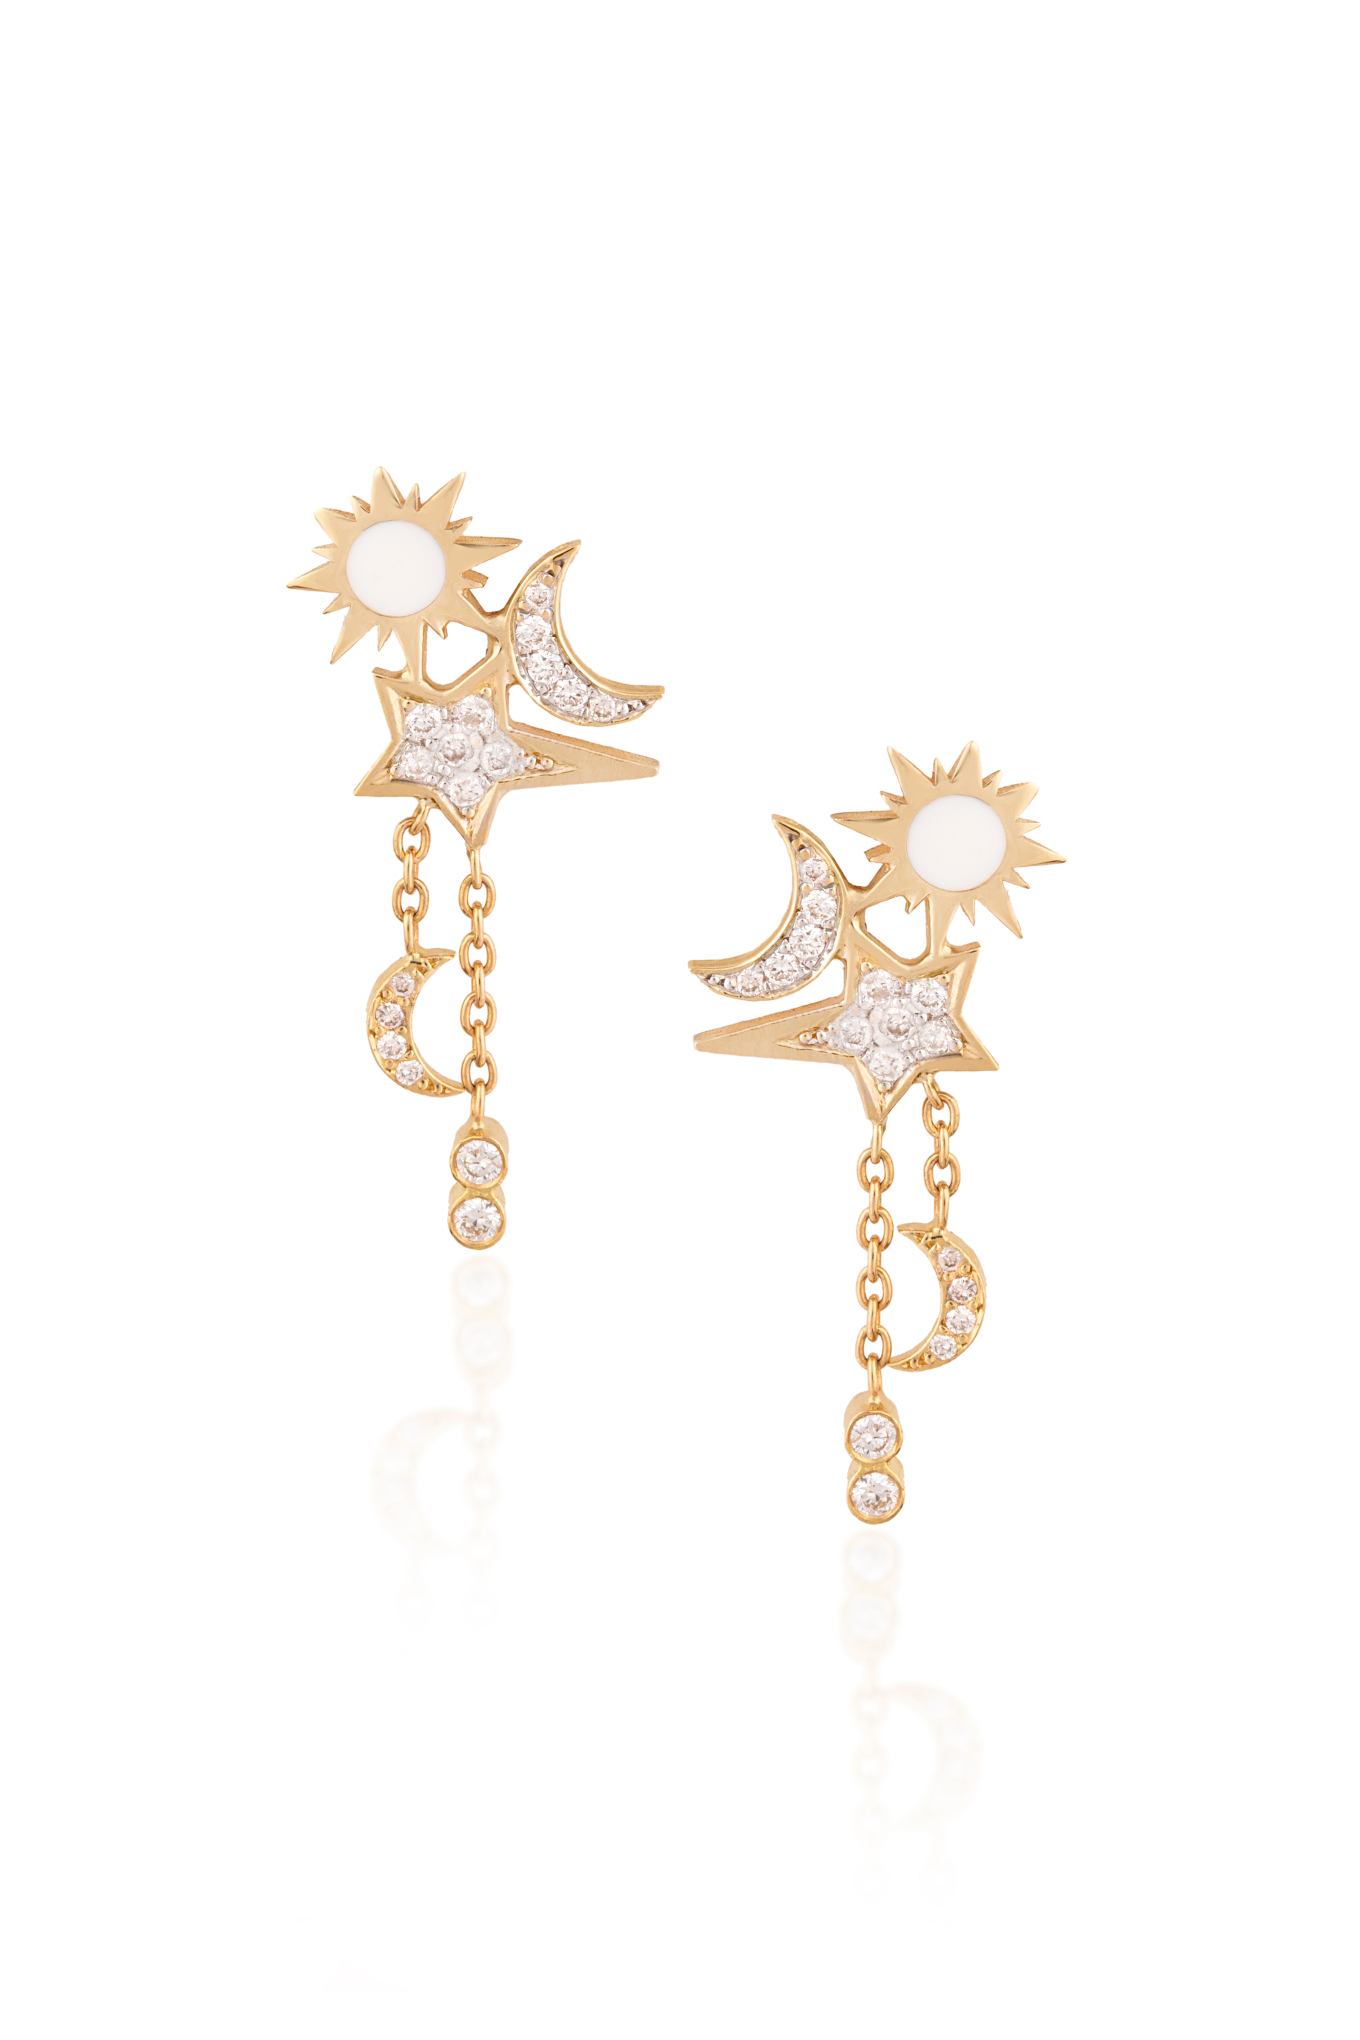 Special event-earrings-charm-diamond-white enamel-trendy